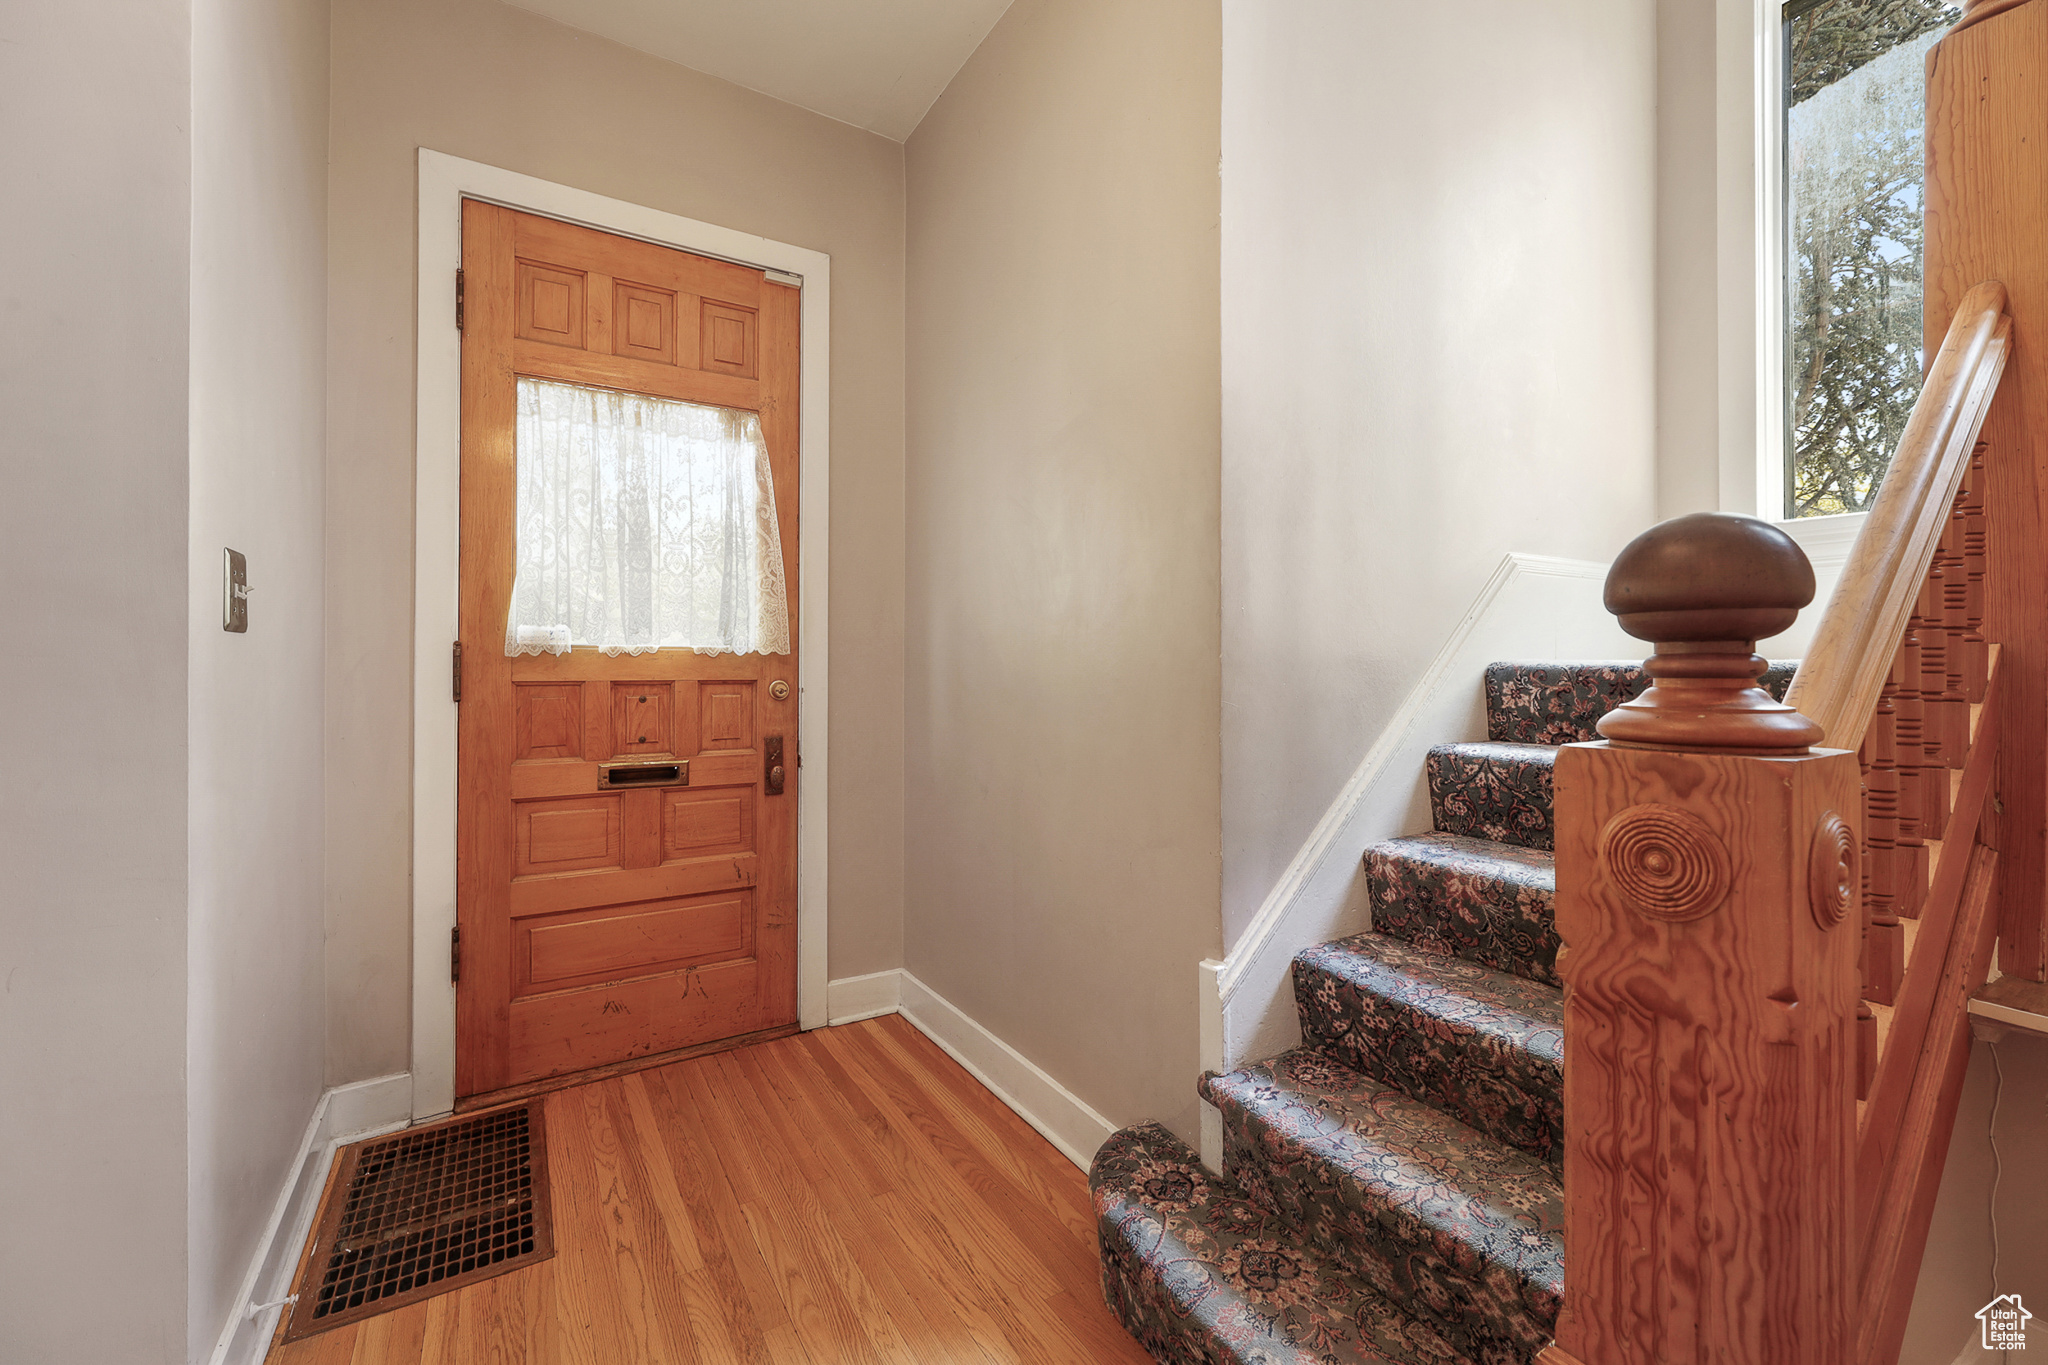 Entryway with original hardwood railings hardwood flooring